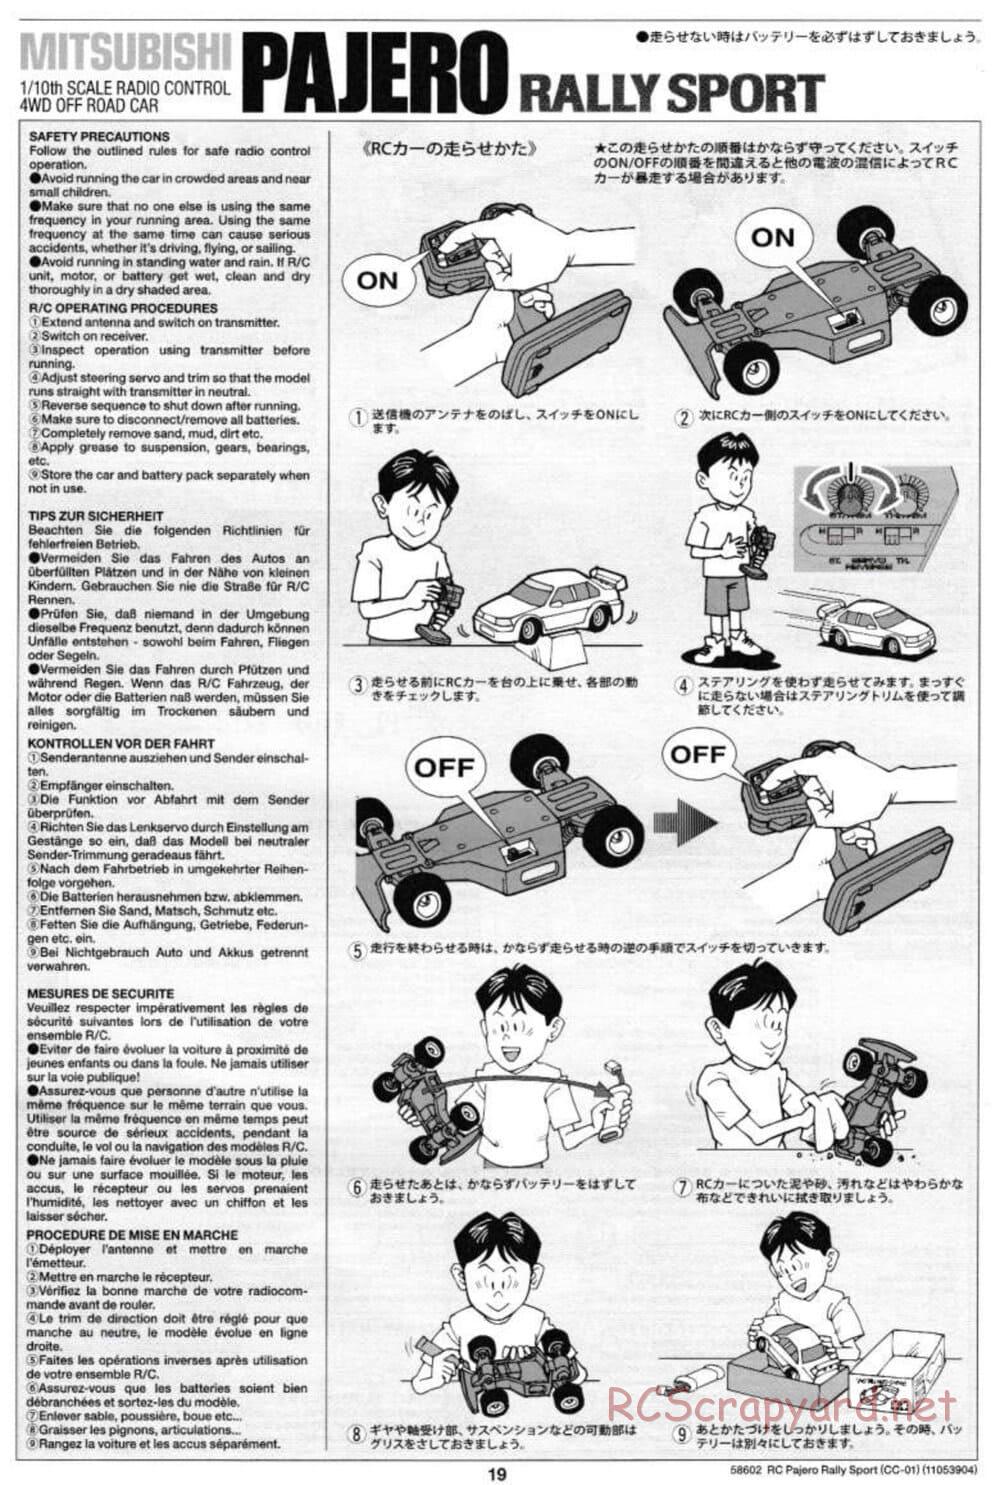 Tamiya - Mitsubishi Pajero Rally Sport - CC-01 Chassis - Manual - Page 19